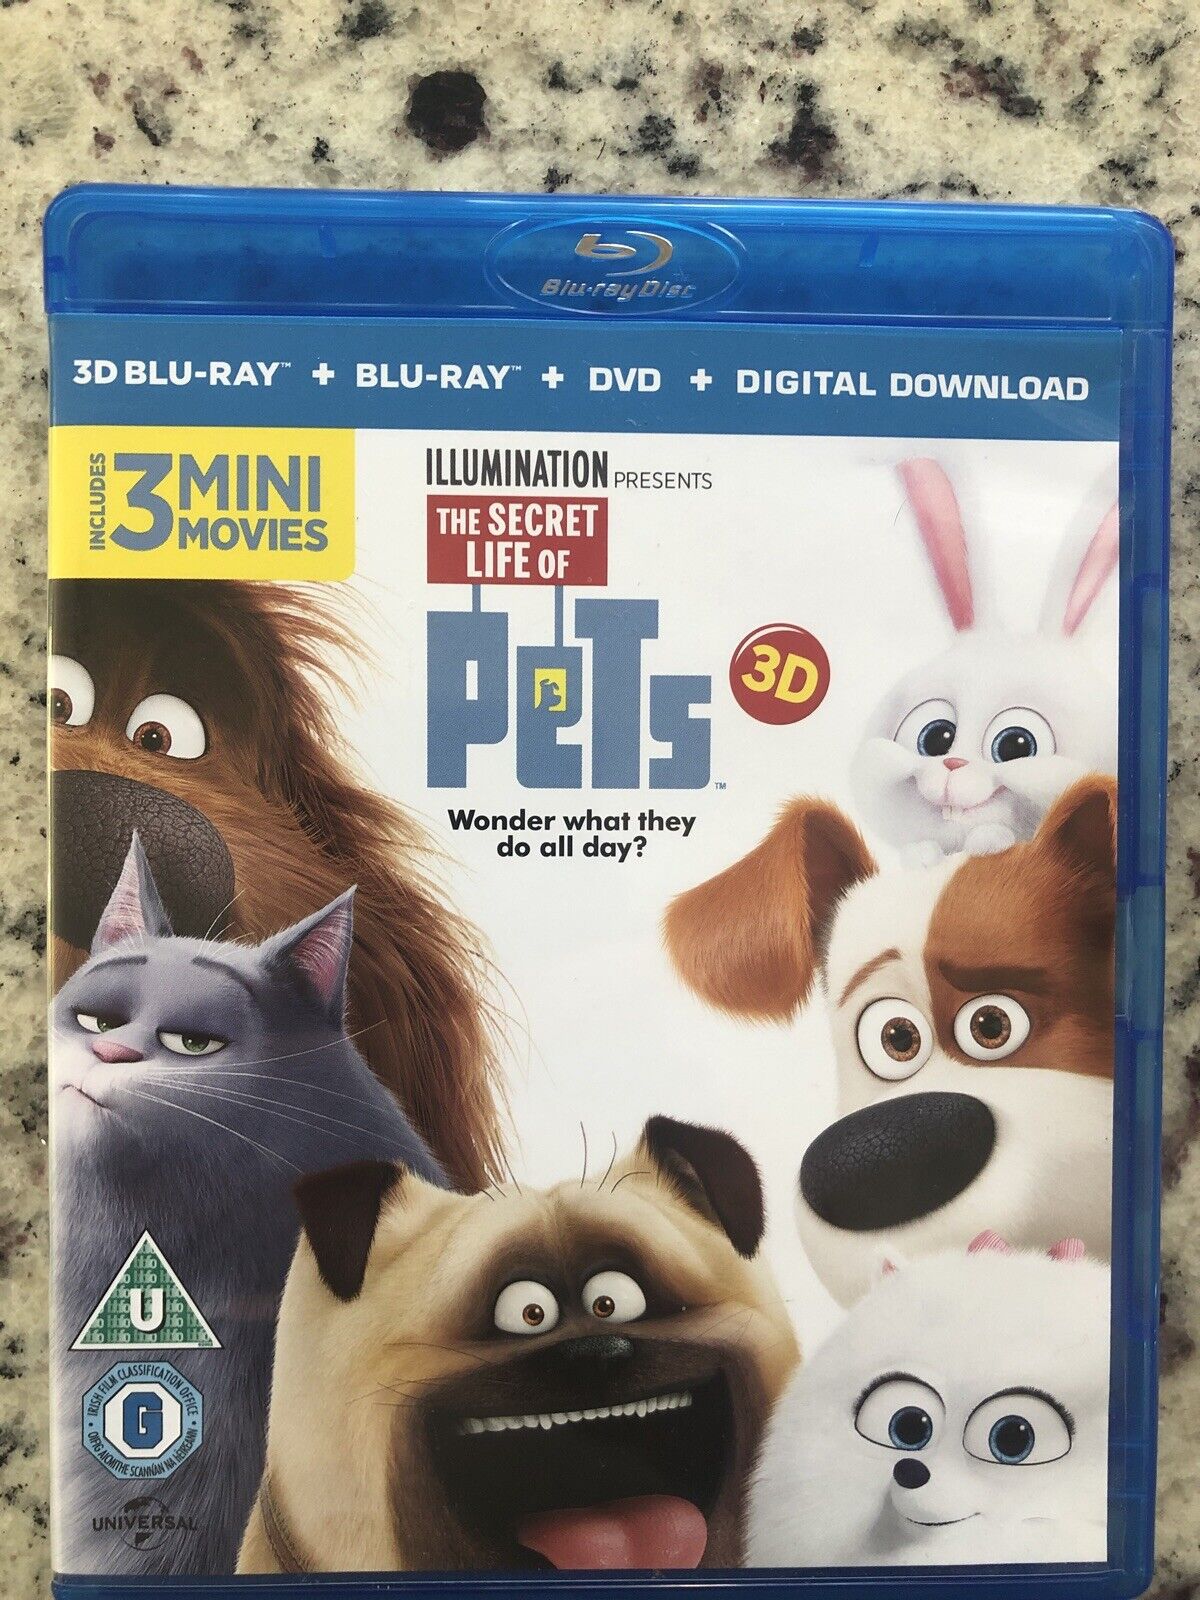 Blu-ray 3D movies - RARE movies! Secret Life of Pets RARE 3D | eBay